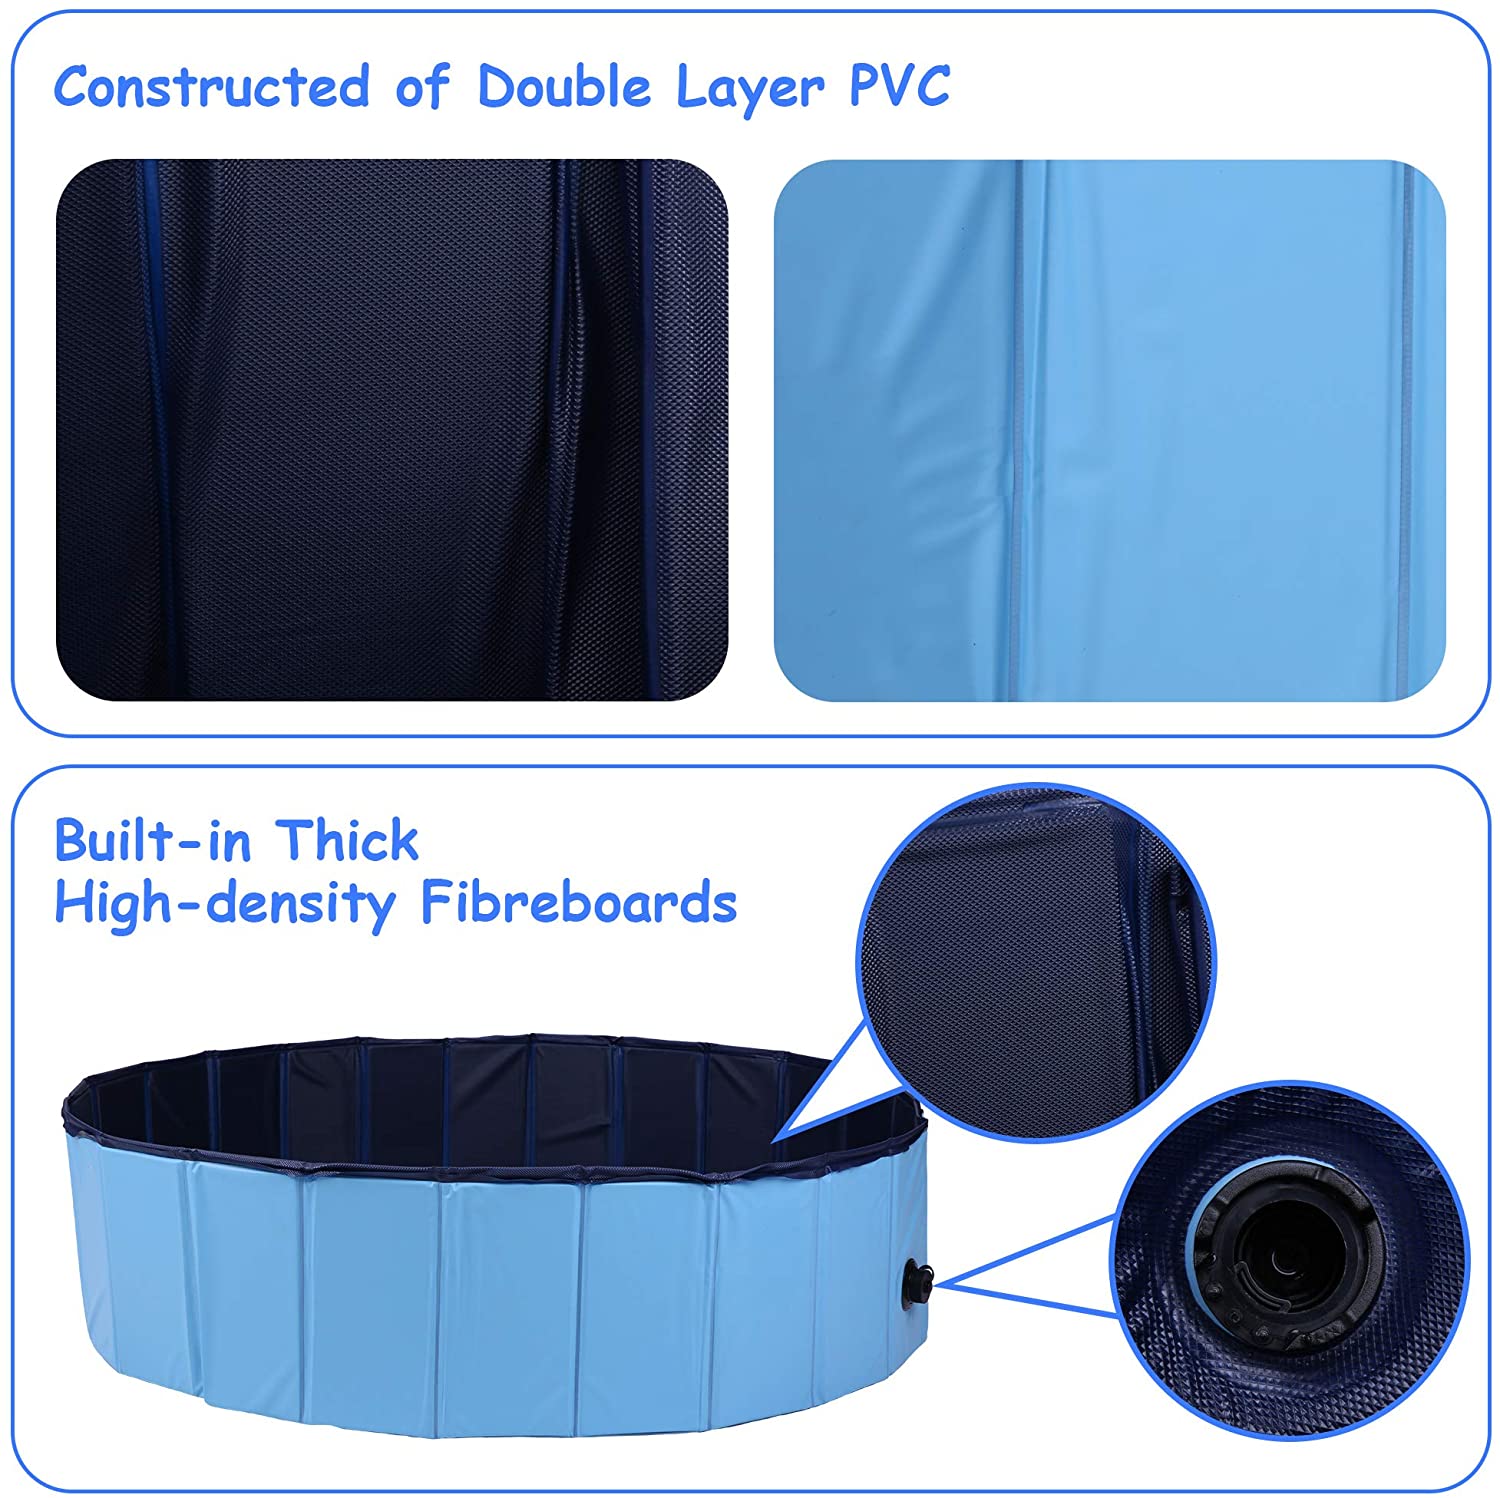 Foldable Dog Pet Swimming Pool Slip-Resistant PVC Kiddie Pool Collapsible Bathing Tub